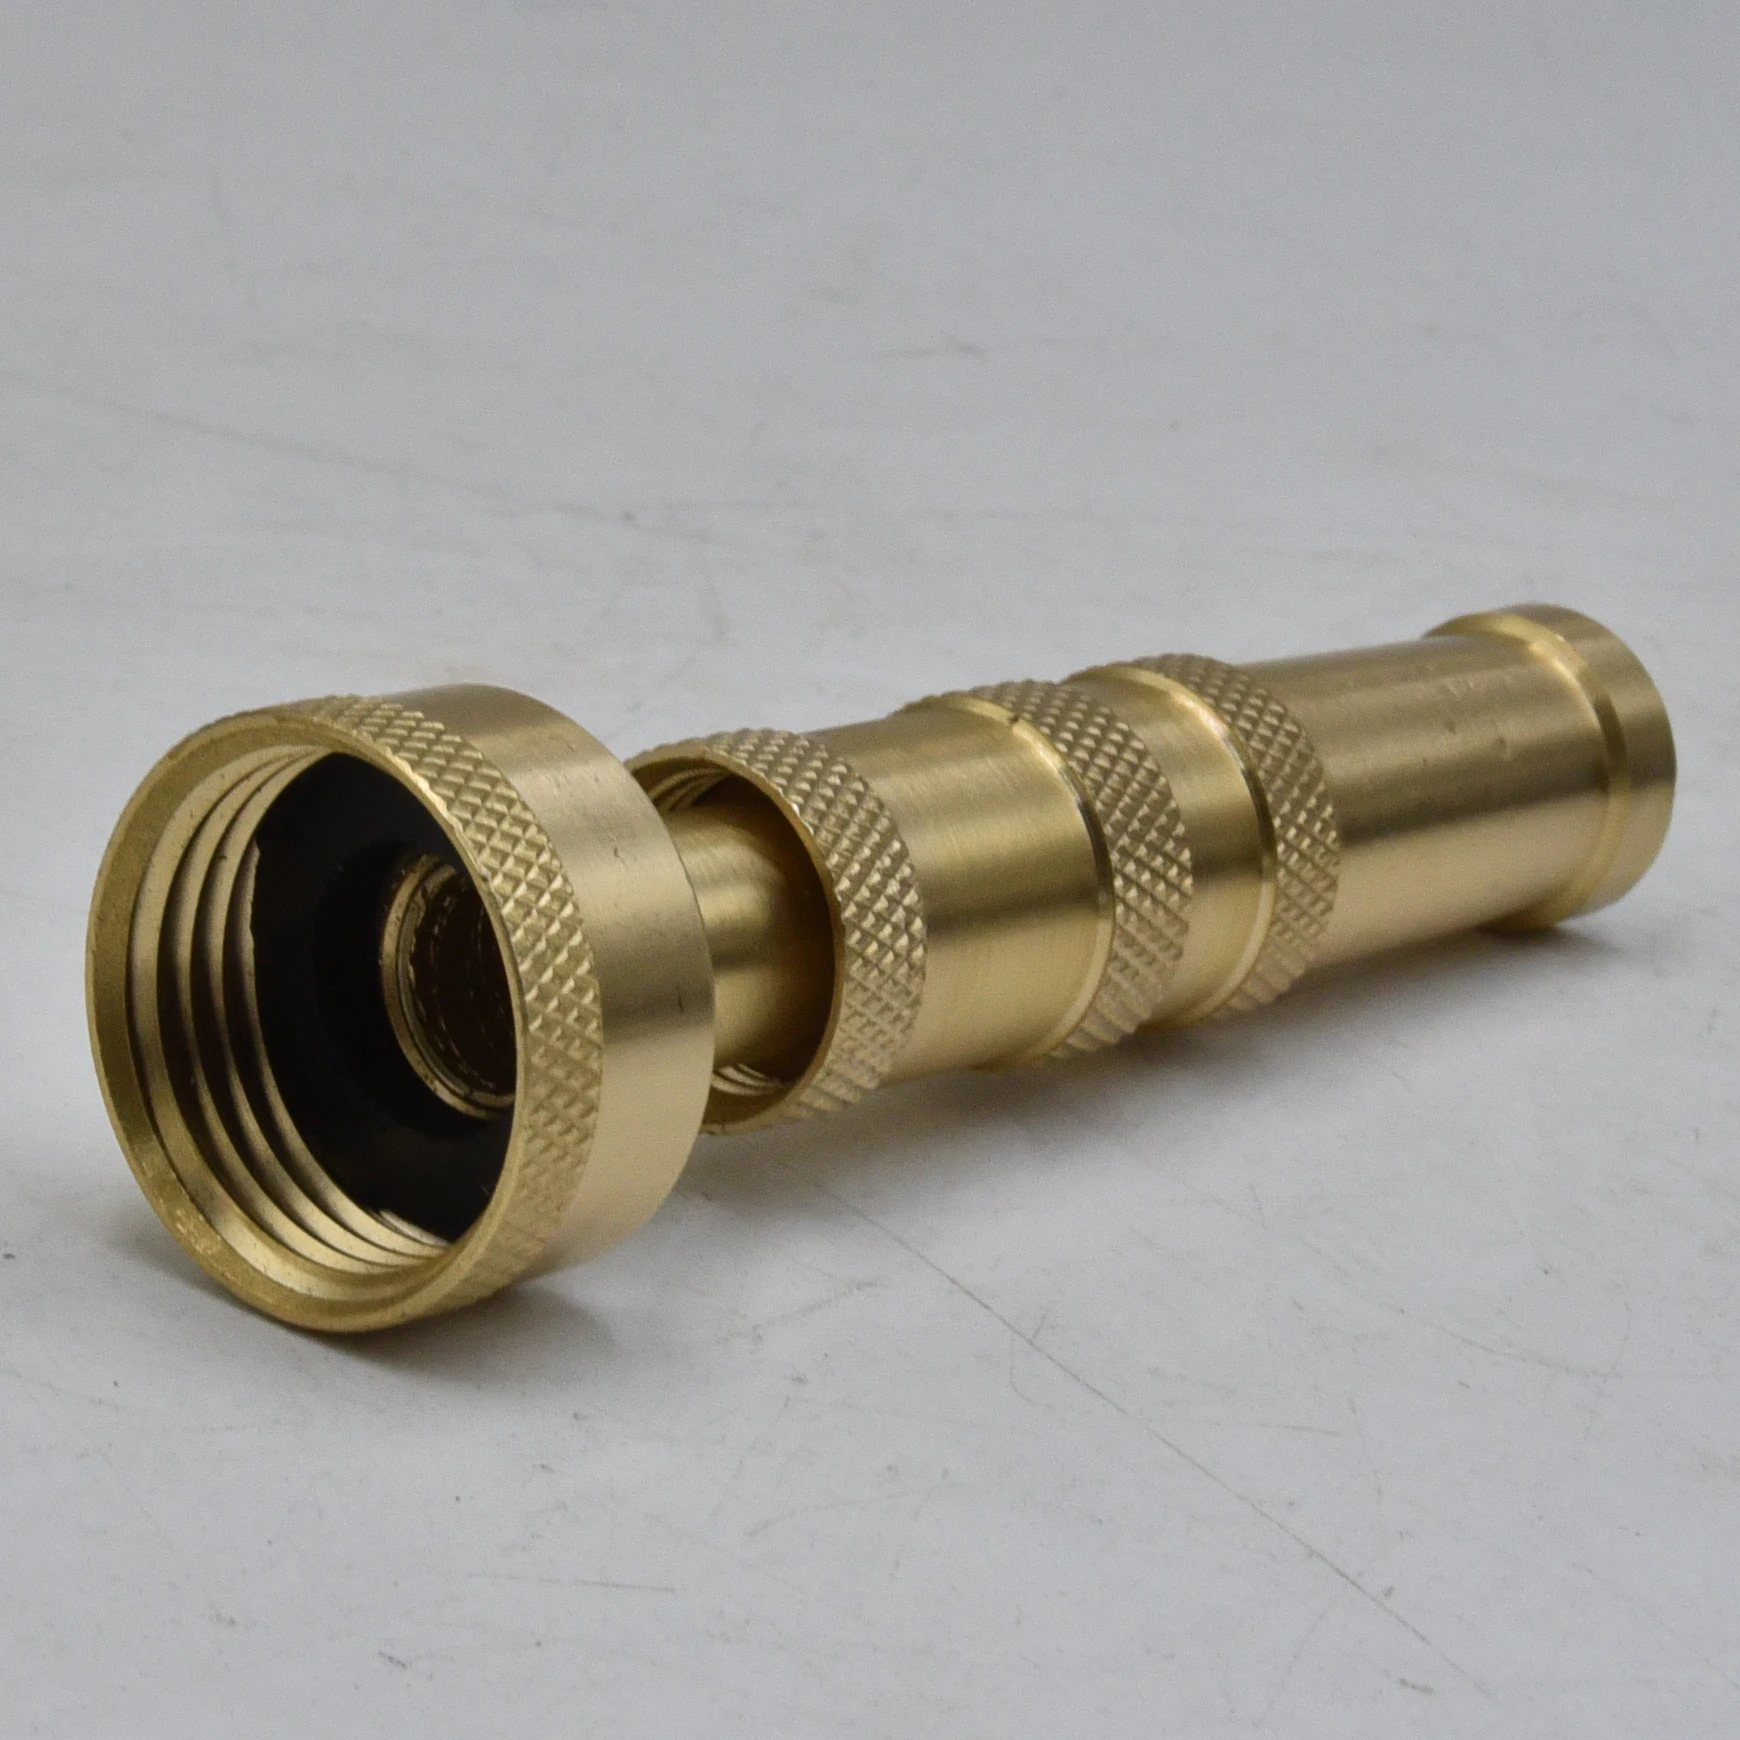 
Heavy-Duty Brass Adjustable Hose Nozzle 